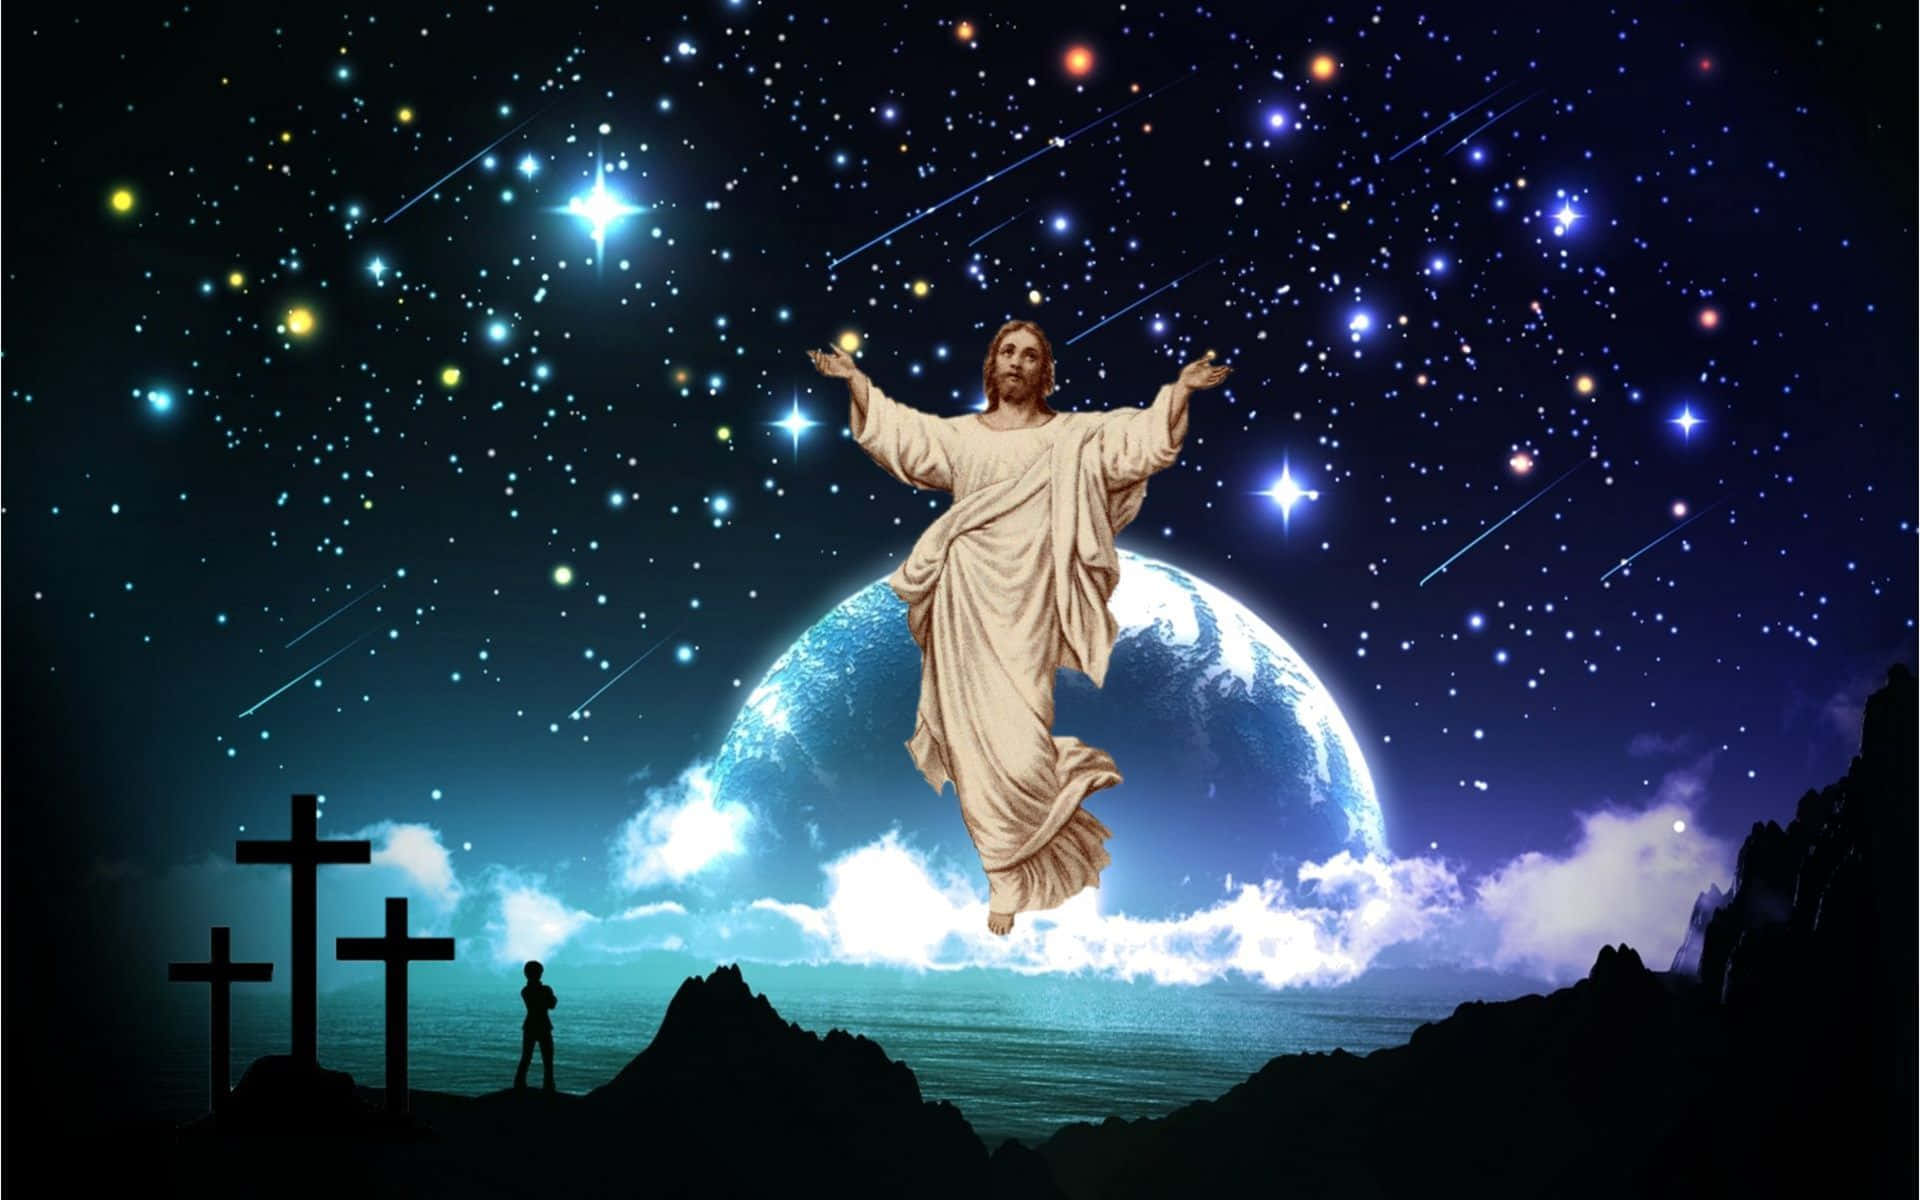 Jesuschristus Universum Bild